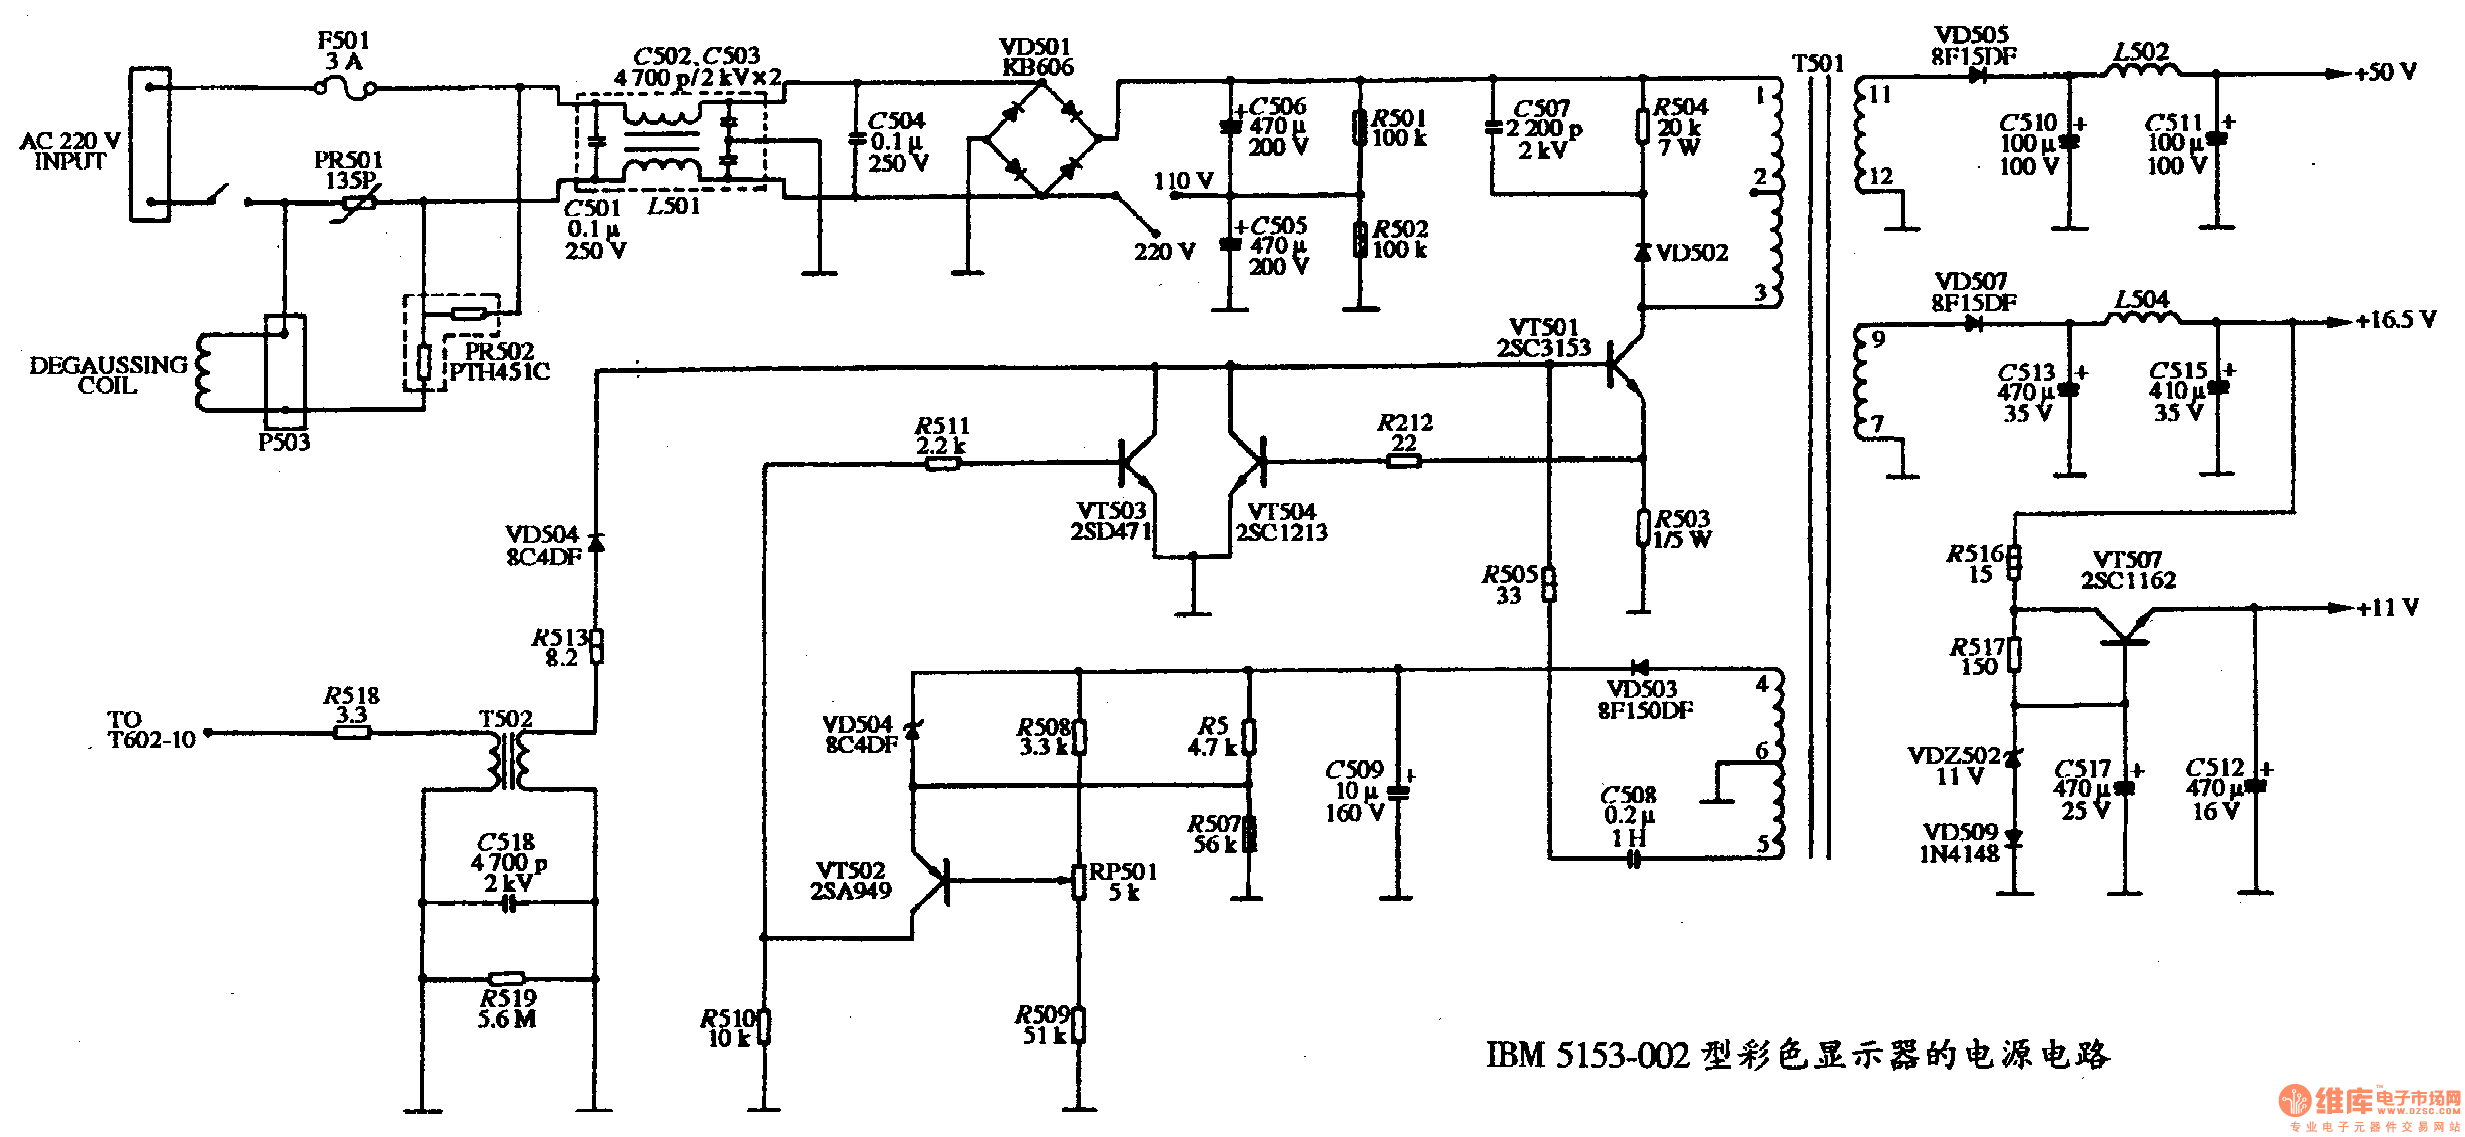 61、IBM 5153-002型彩色显示器的电源电路图